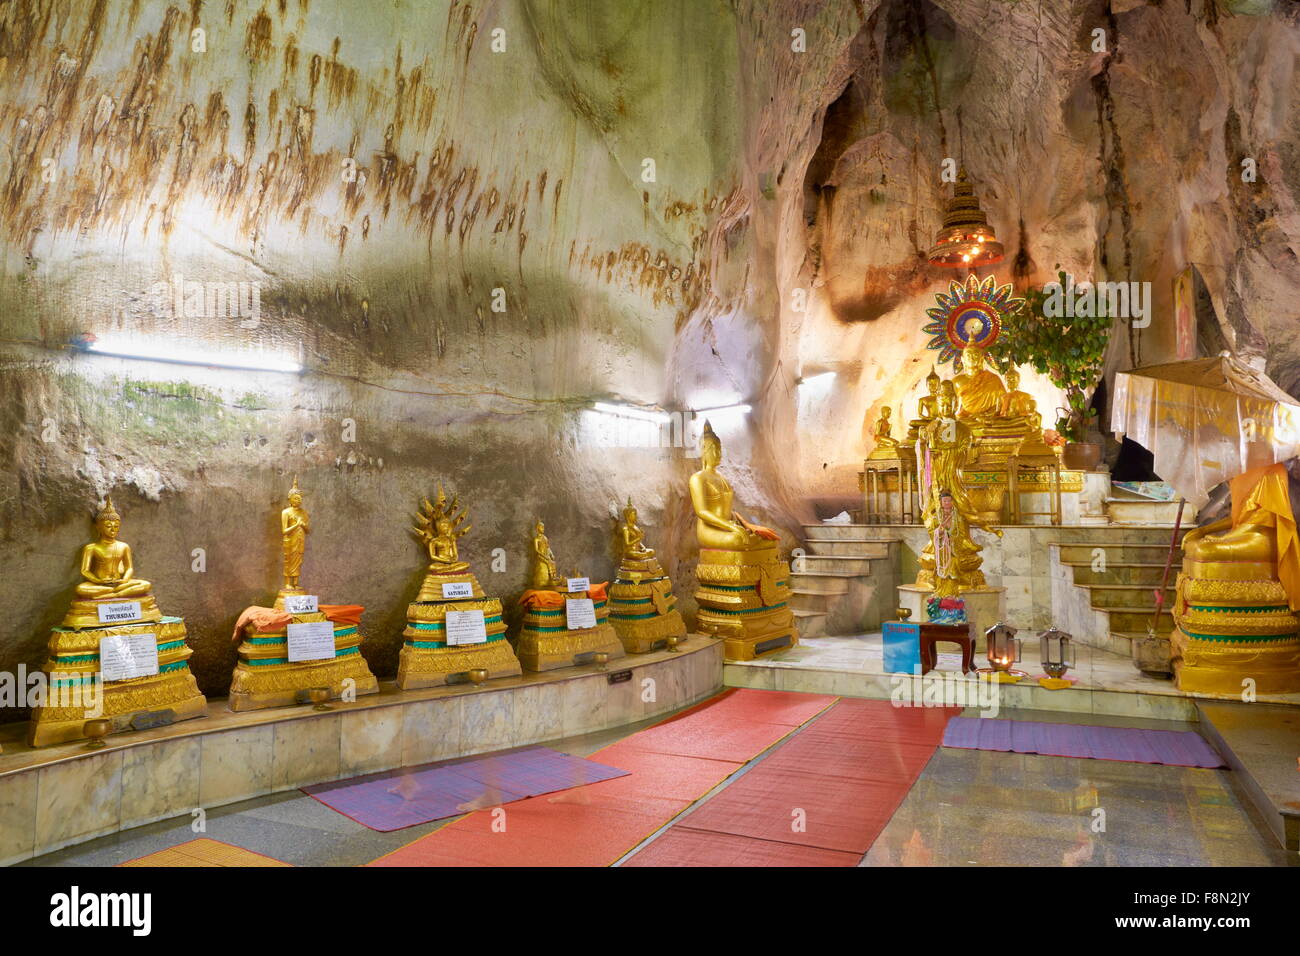 Thailand - Khao Yoi Buddhist Cave Temple Stock Photo